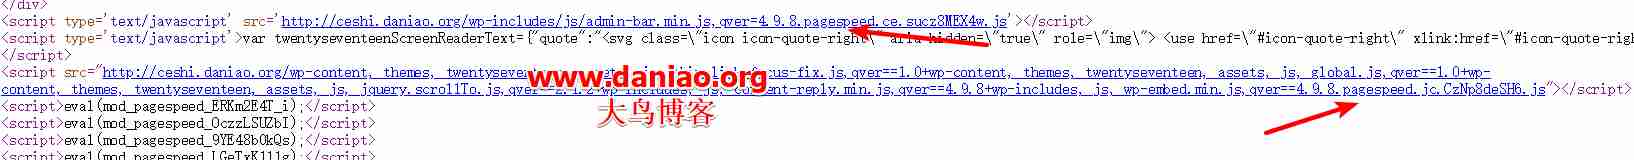 BT(宝塔面板)6.X自编译nginx前端优化模块ngx_pagespeed-让网站速度在再给力一点